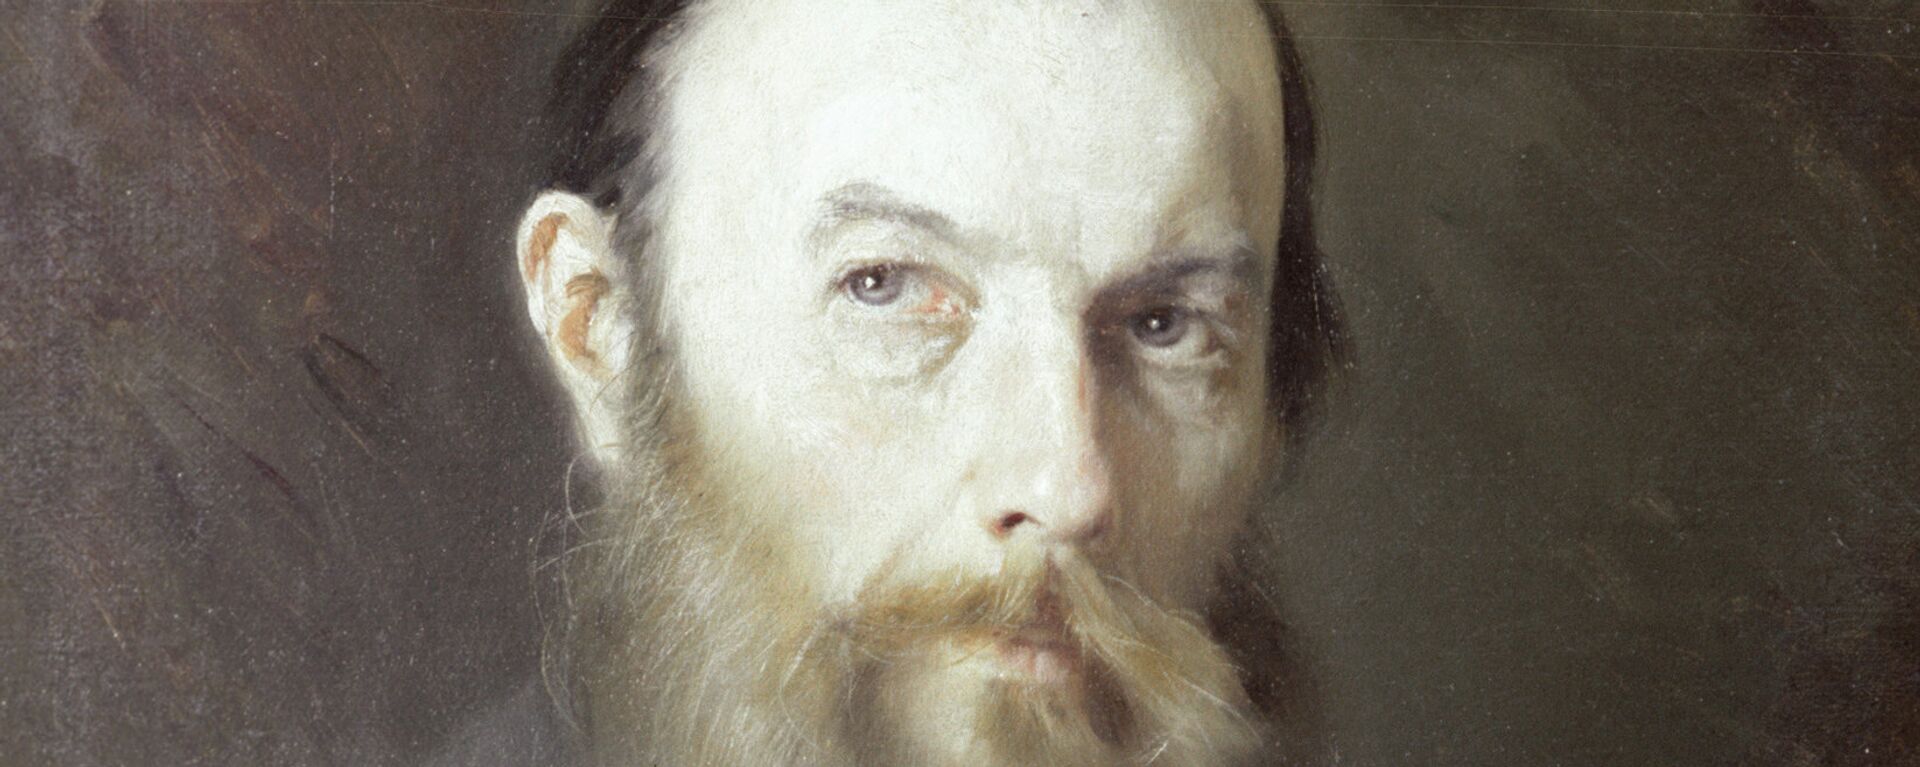 Fyodor Dostoievski, o grande clássico da literatura russa - Sputnik Brasil, 1920, 19.06.2022